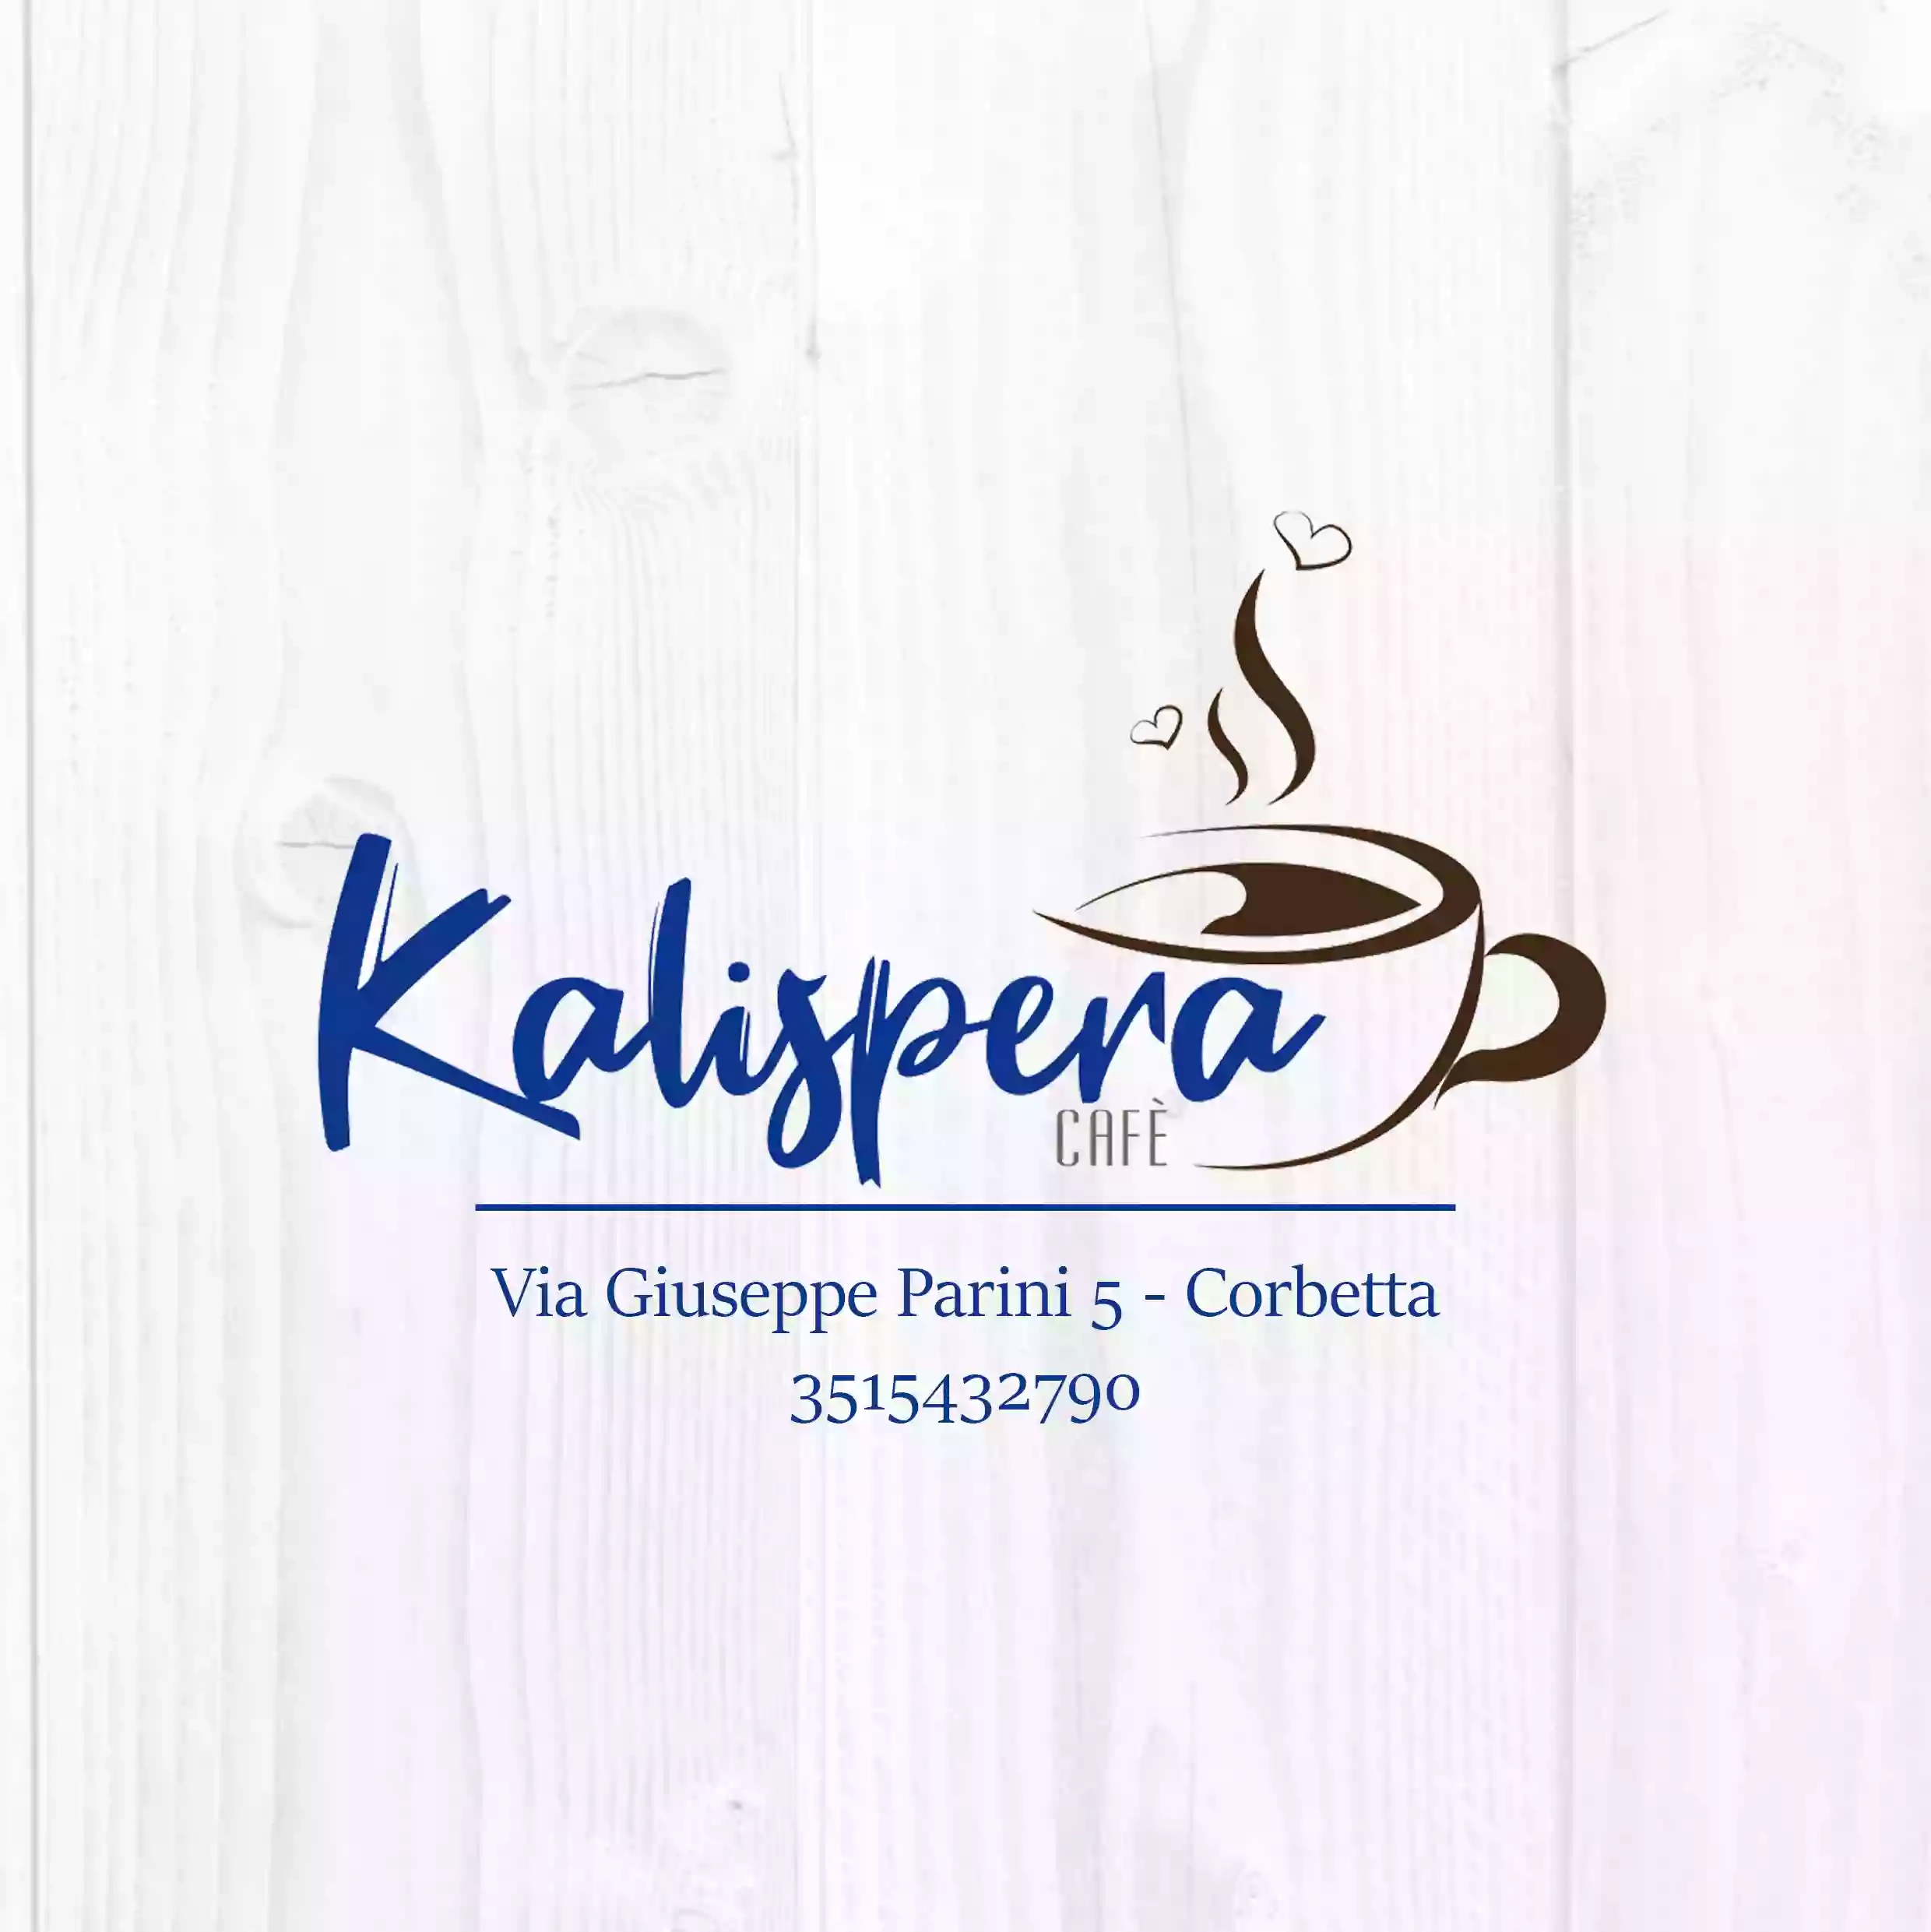 Kalispera Café